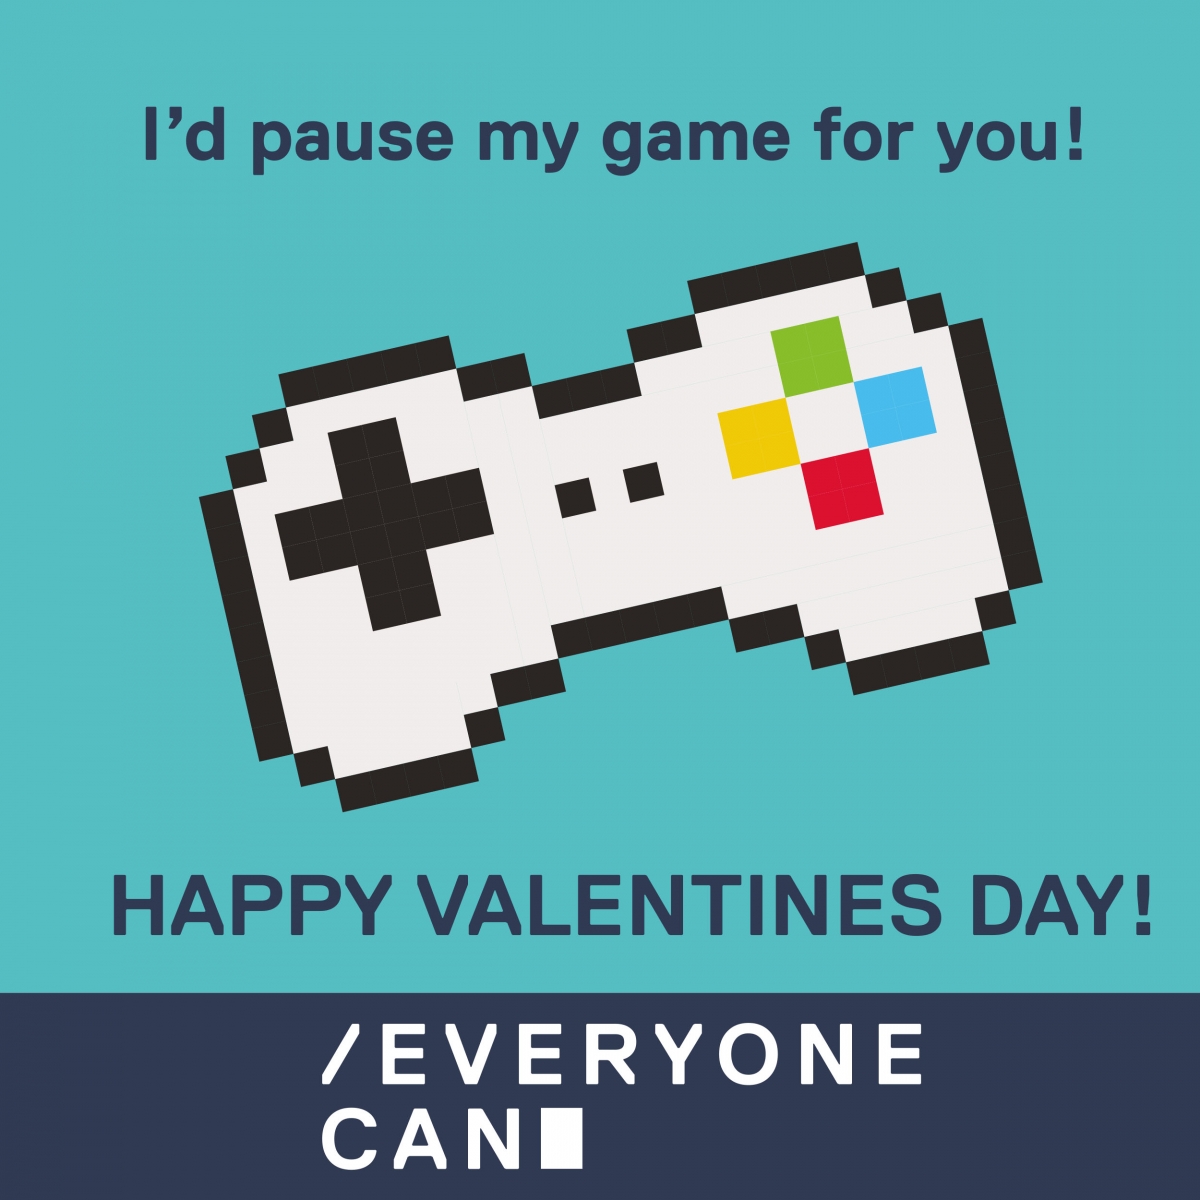 Send a Valentine's Day E-Card eCards